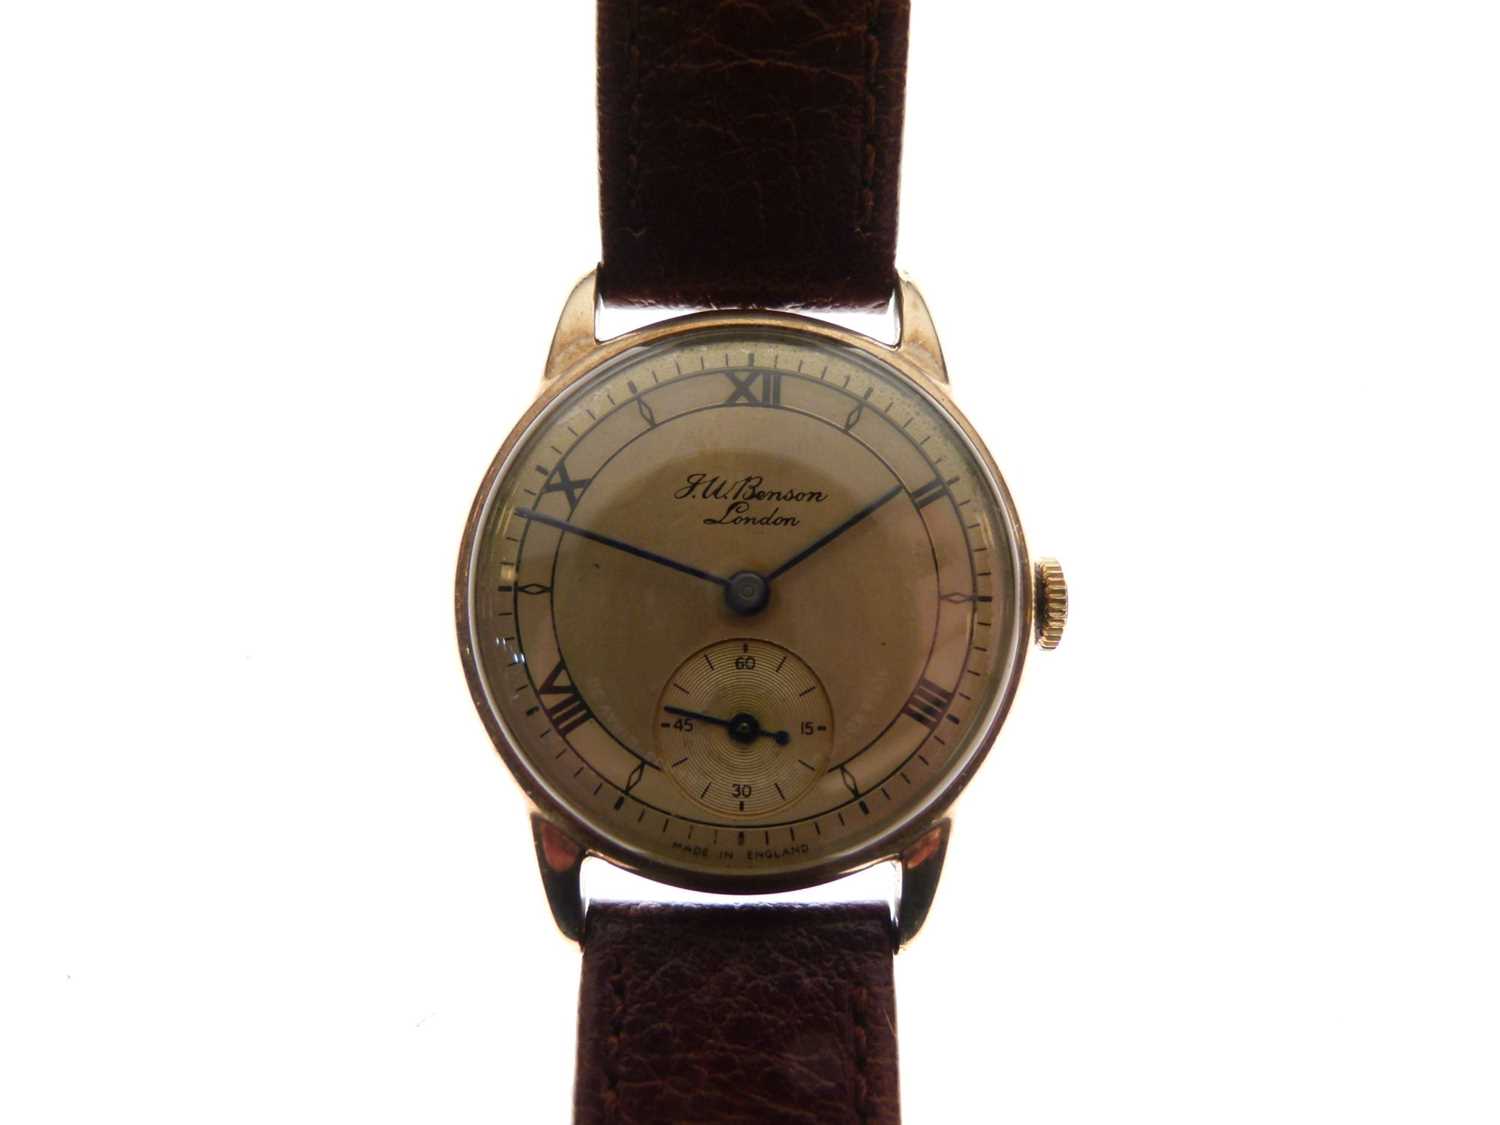 J.W Benson - Gentleman's 9ct gold cased wristwatch - Image 7 of 7